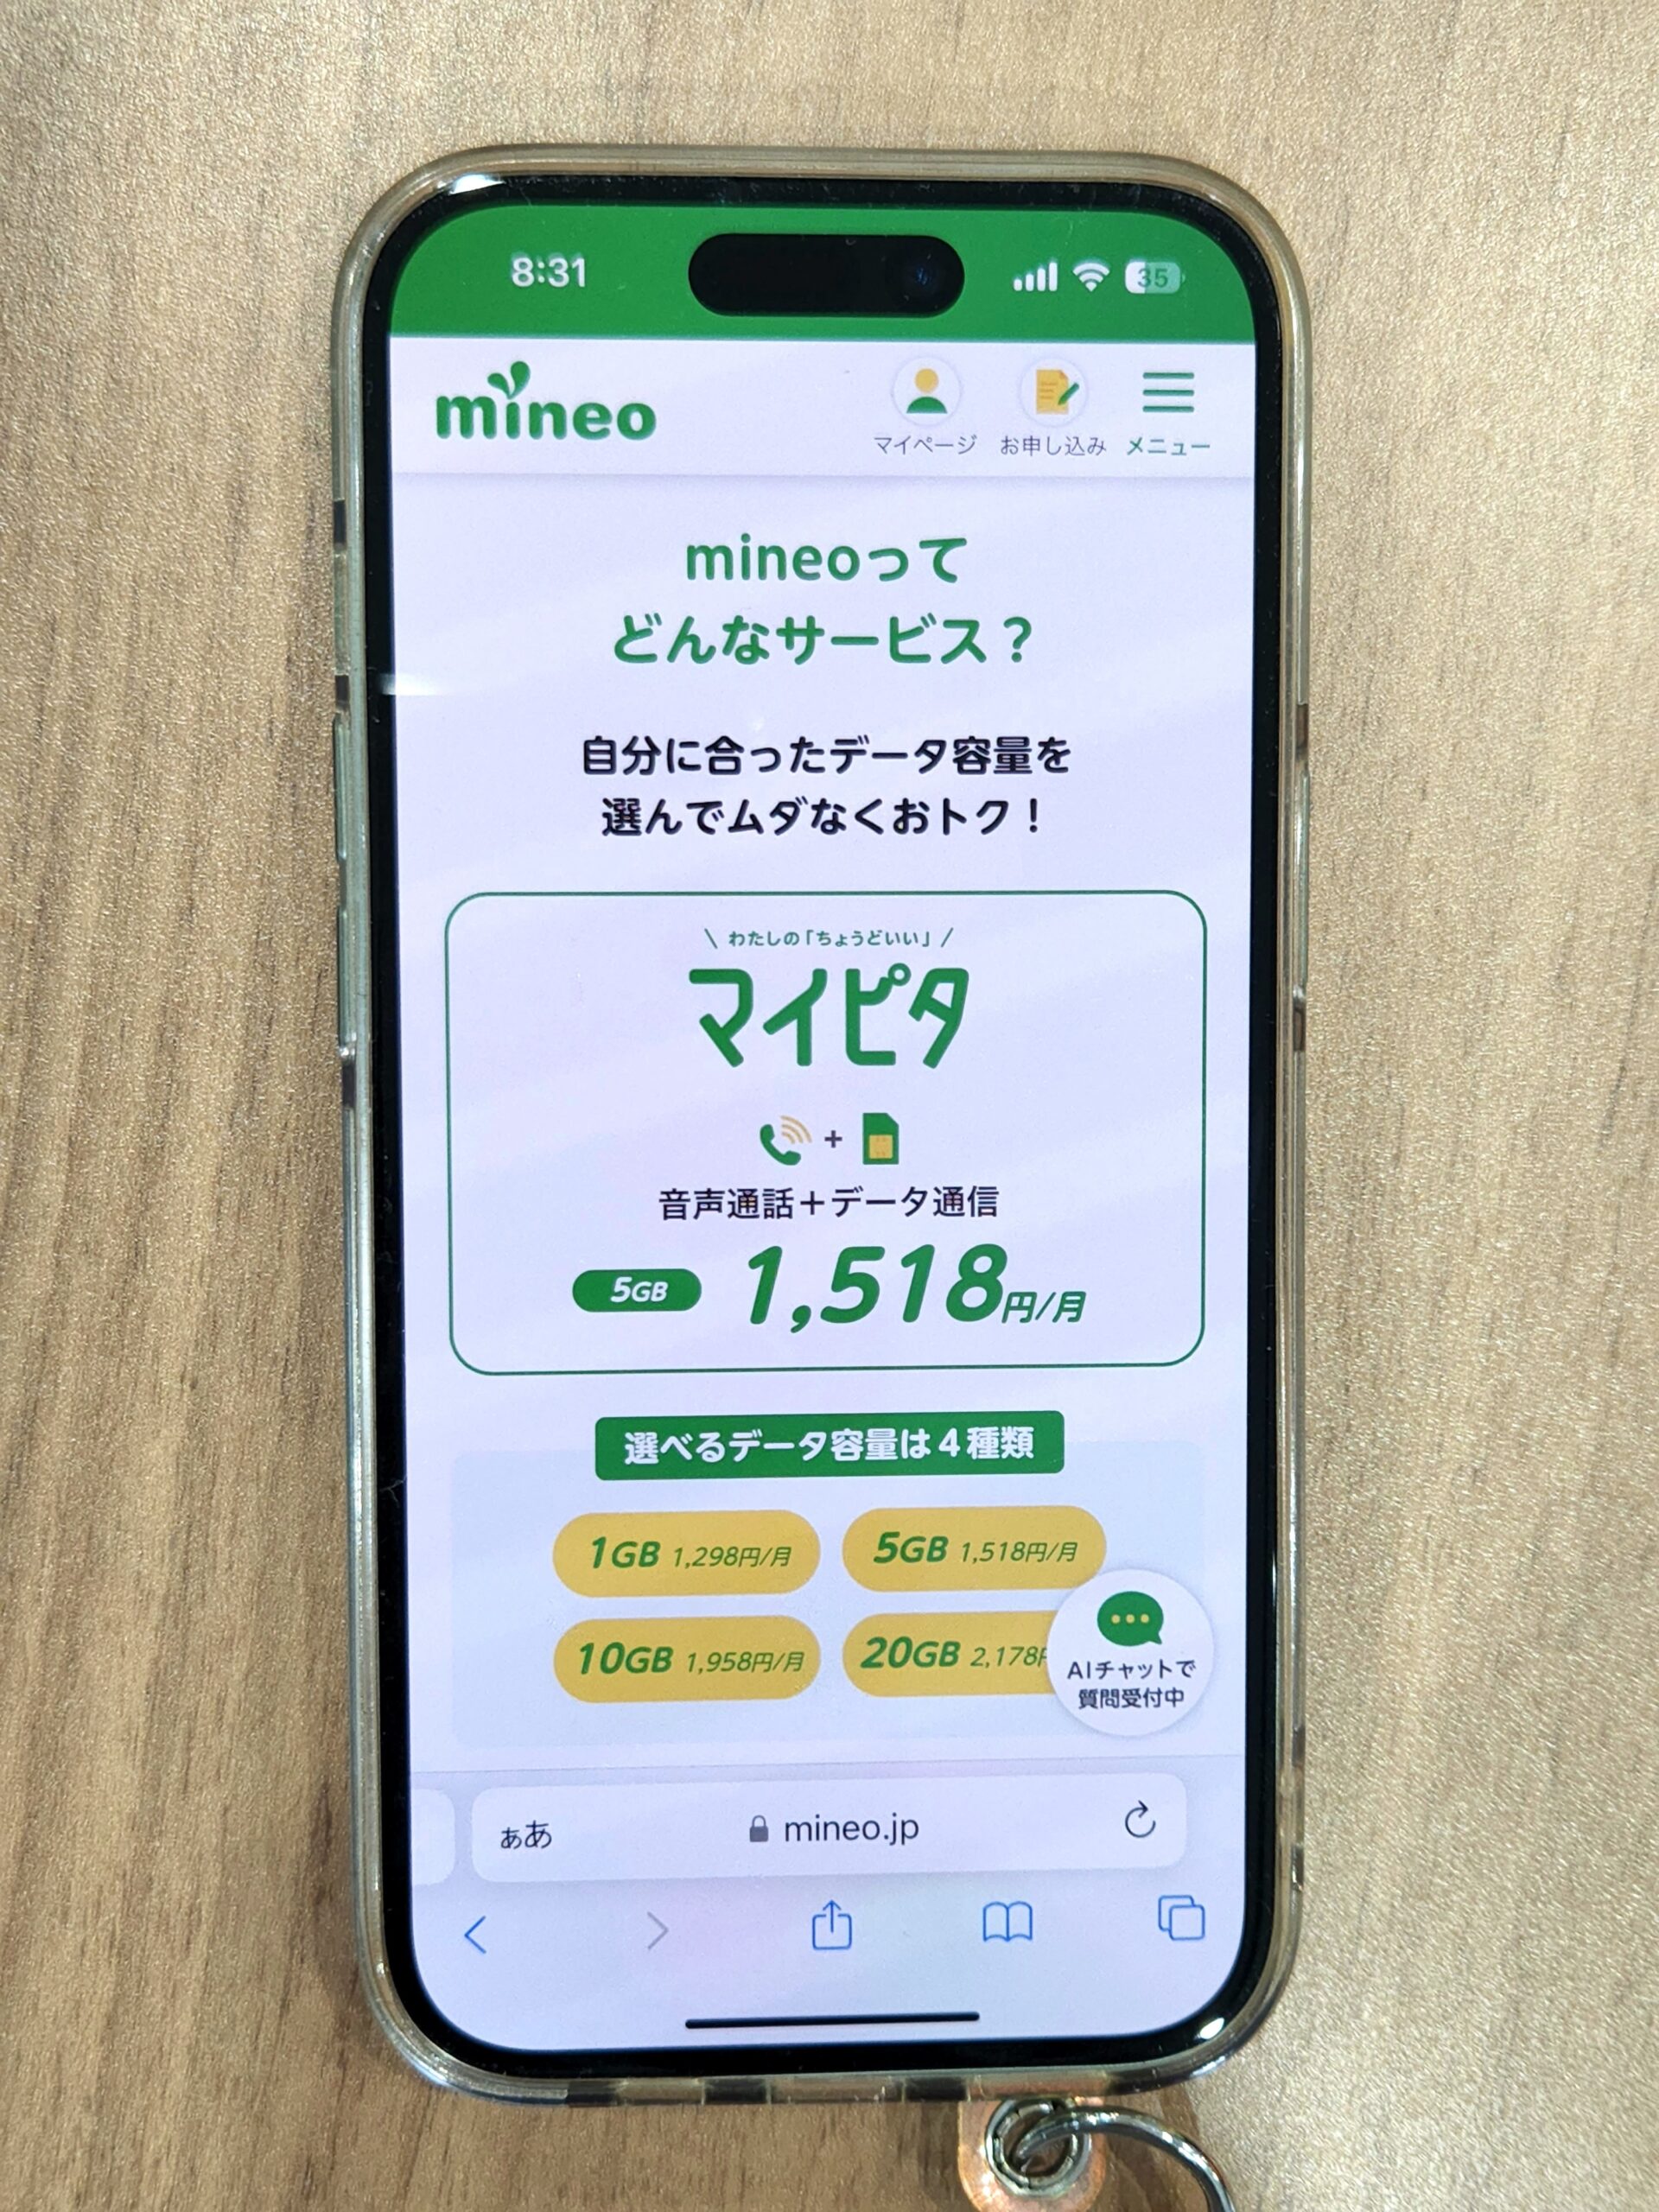 mineo-info